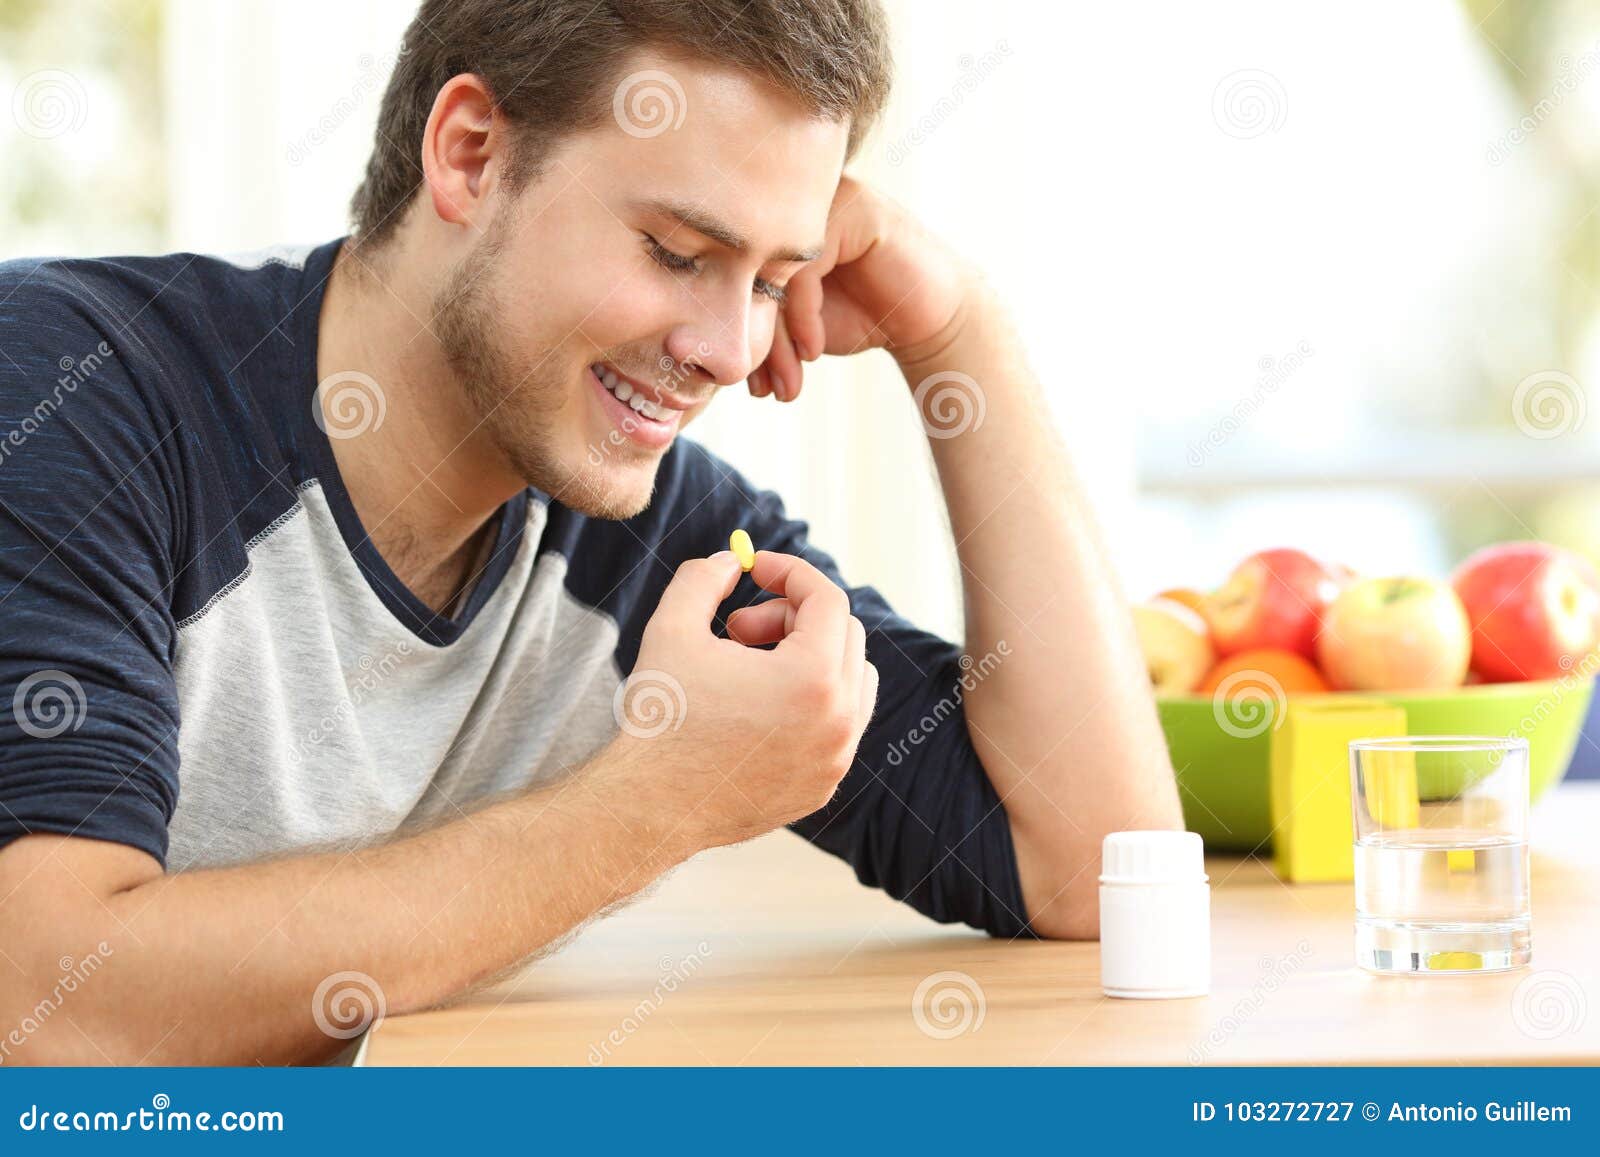 happy man taking a vitamin pill at home